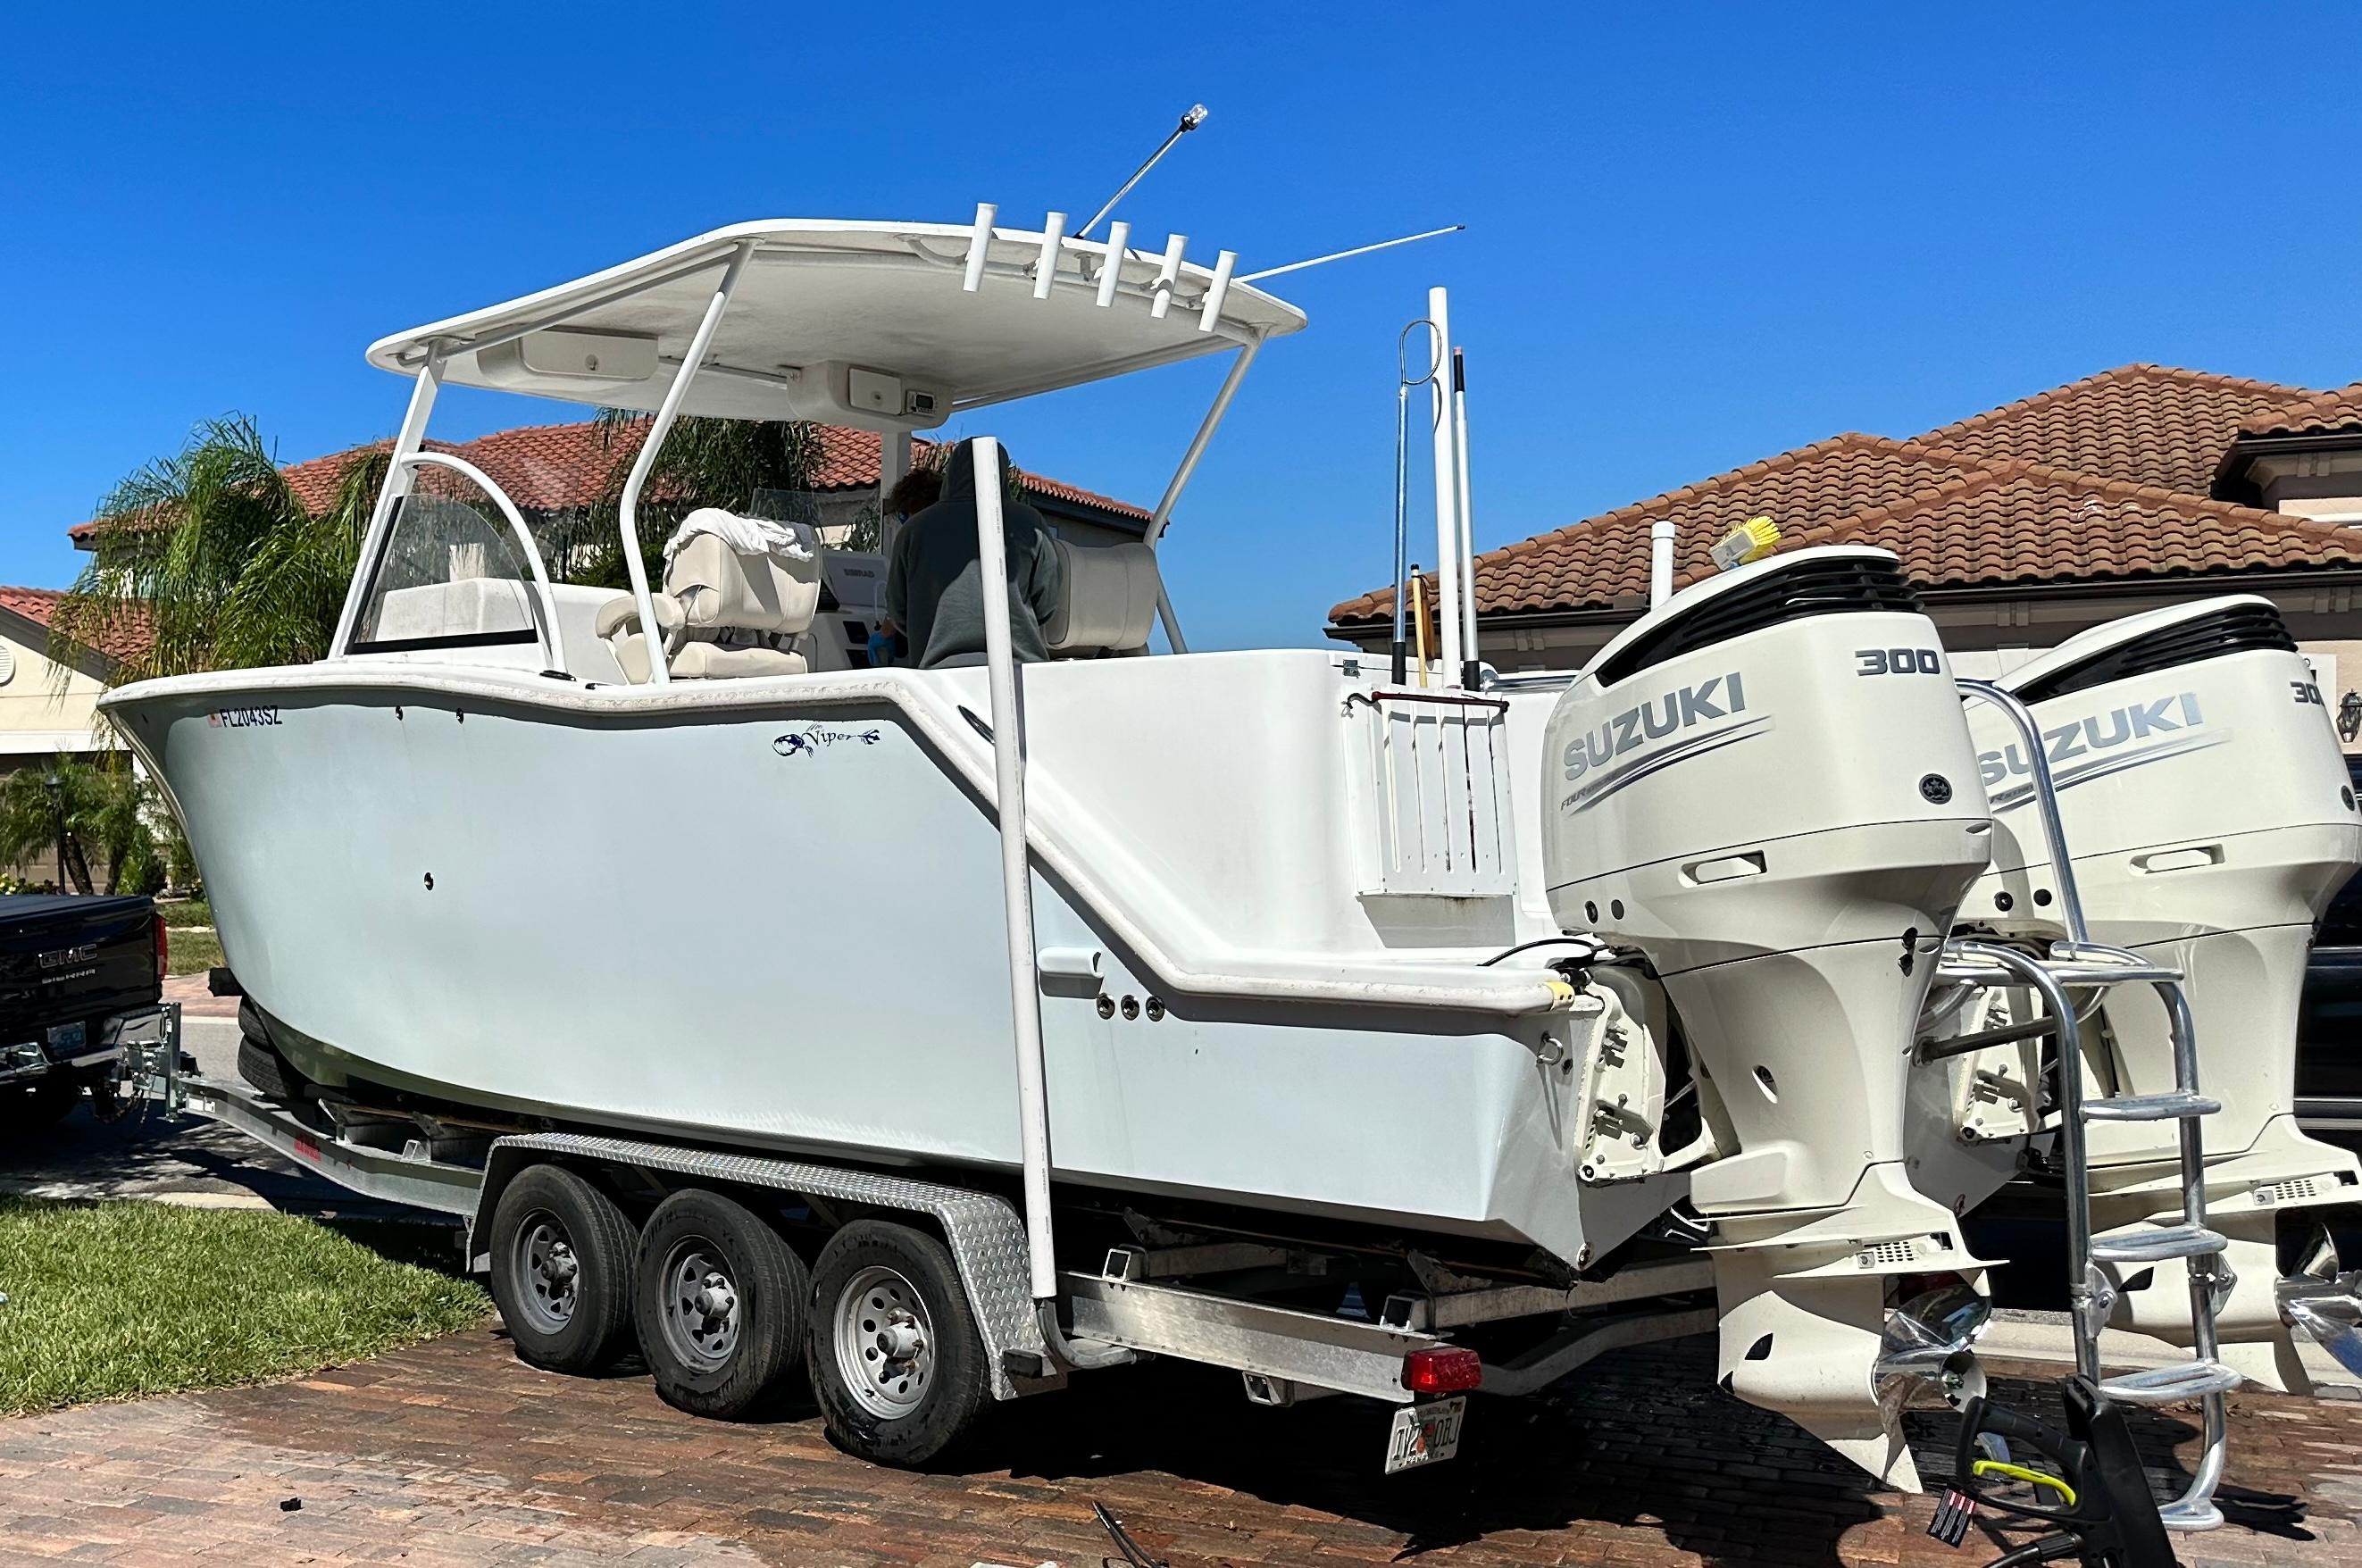 viper catamaran for sale australia